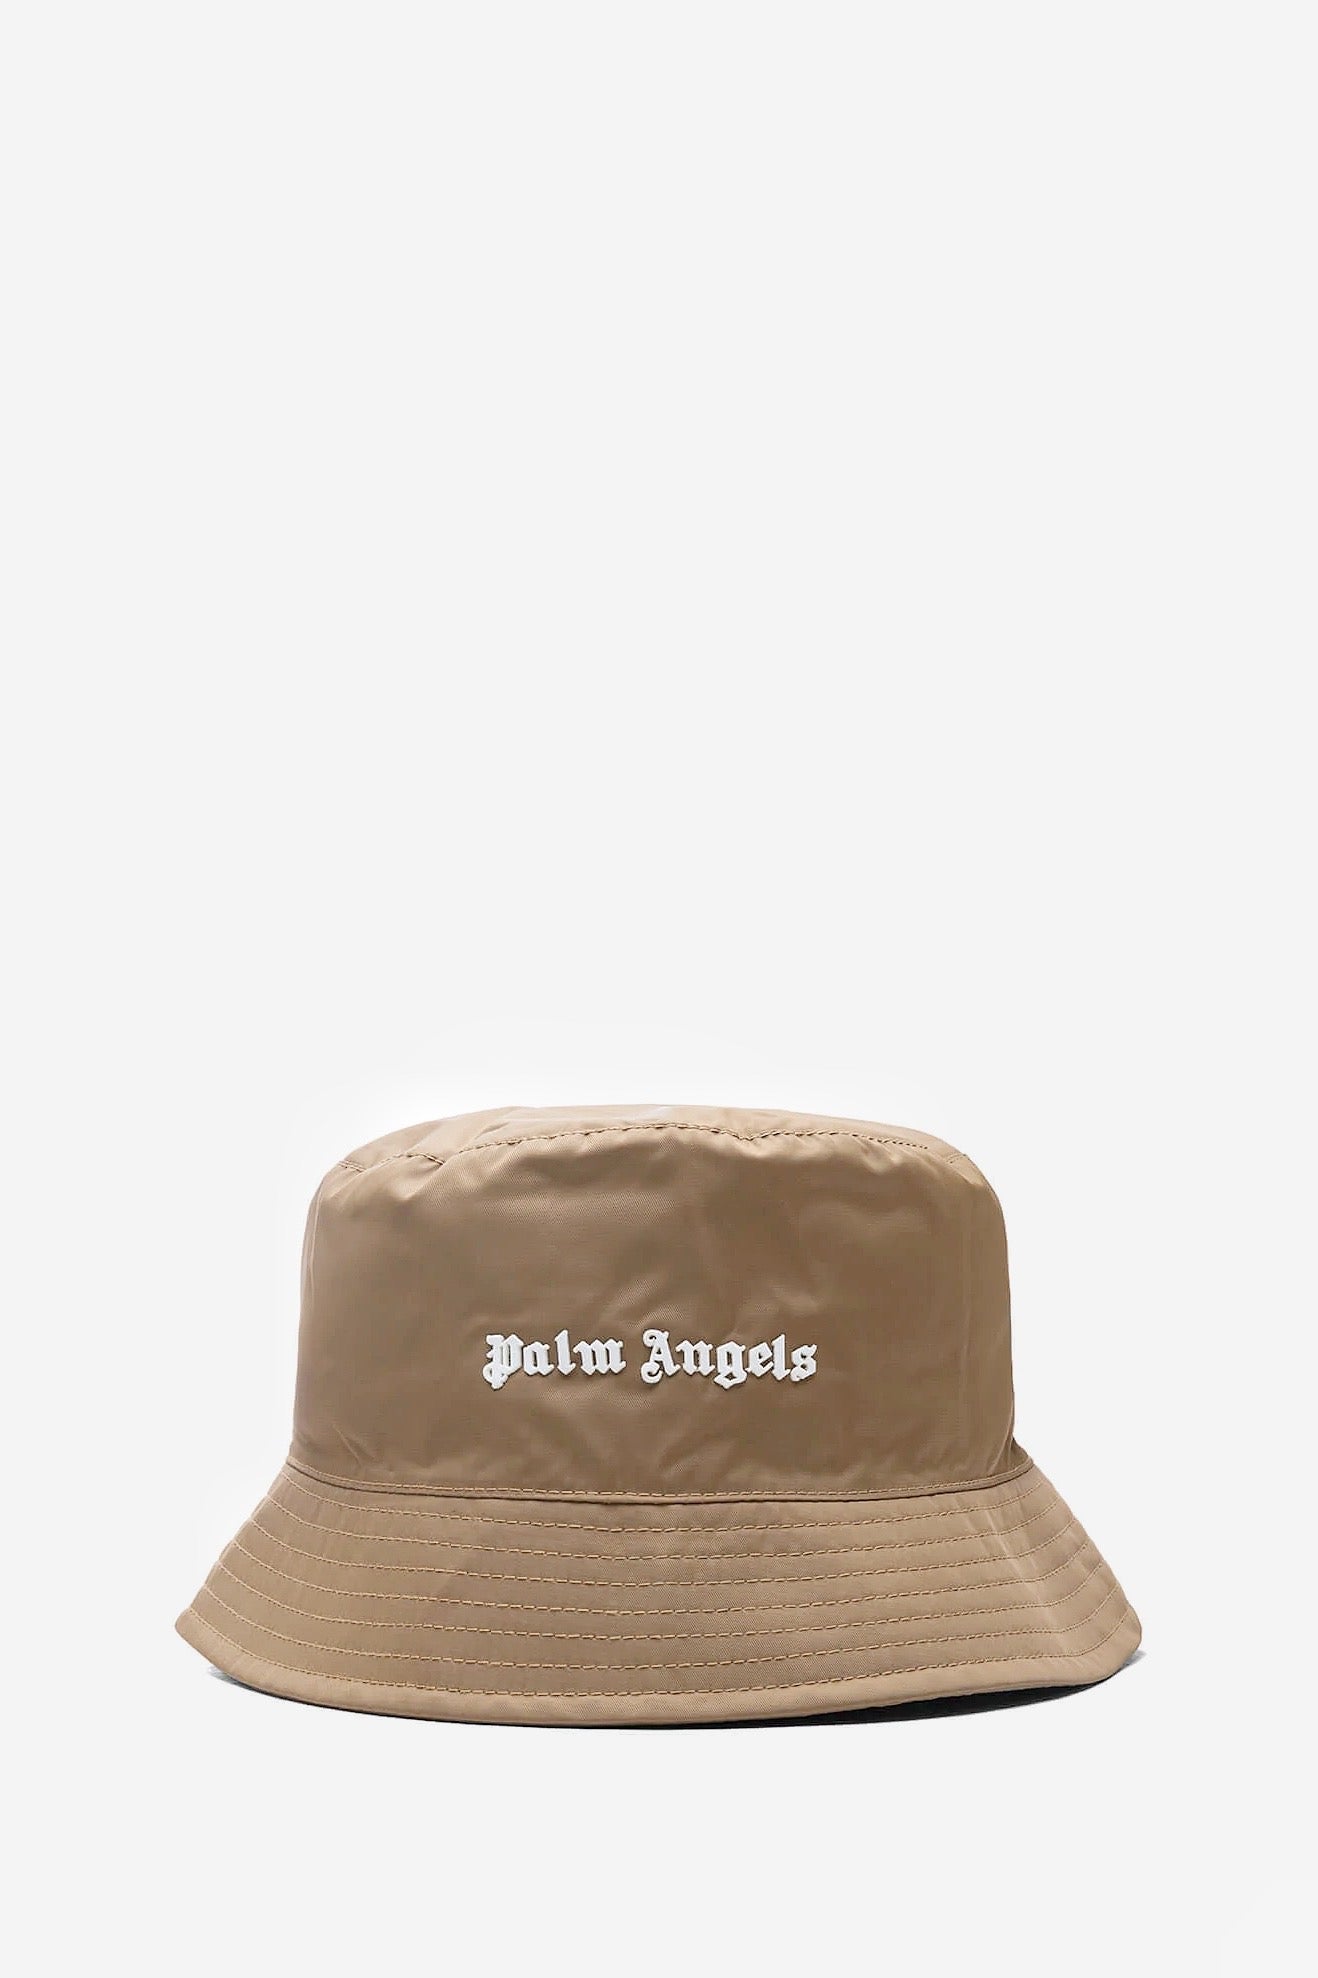 PALM ANGELS-HAT